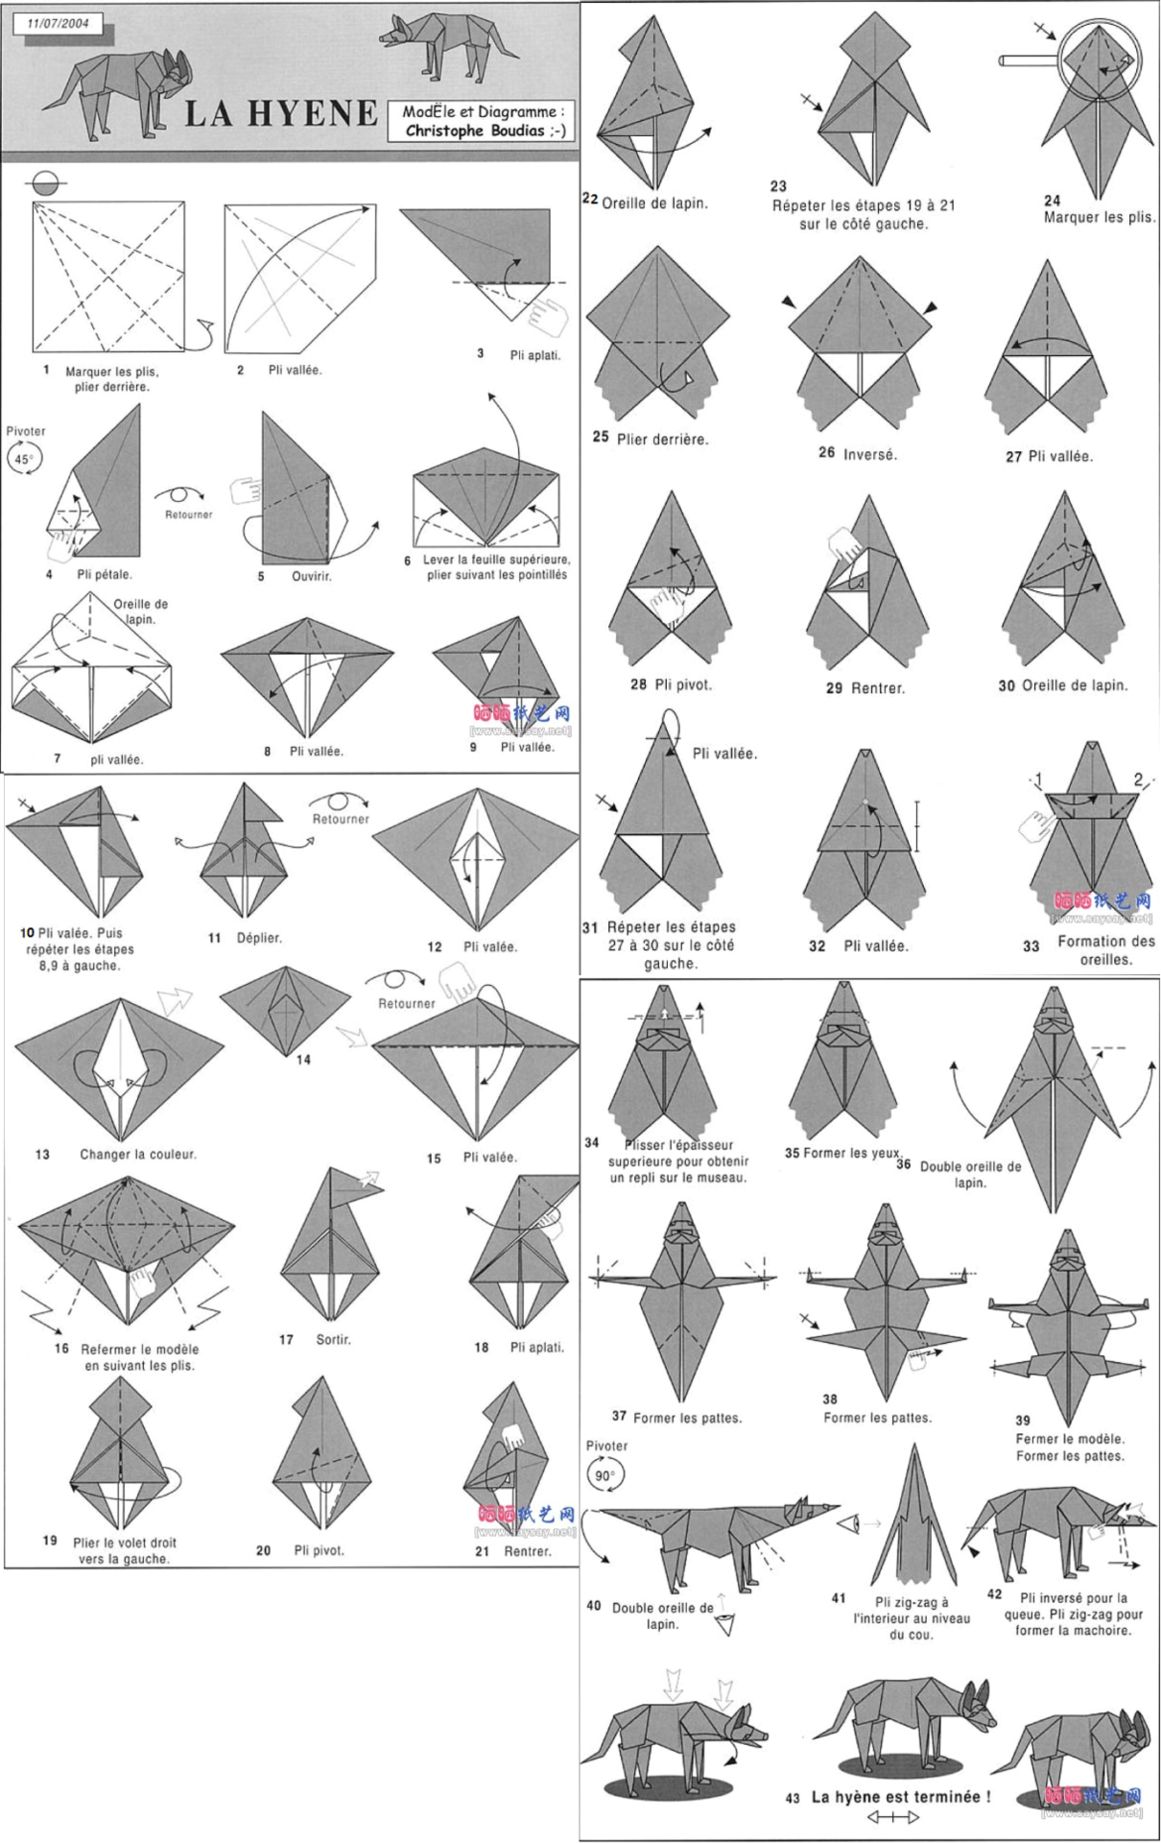 Origami hyene instructions